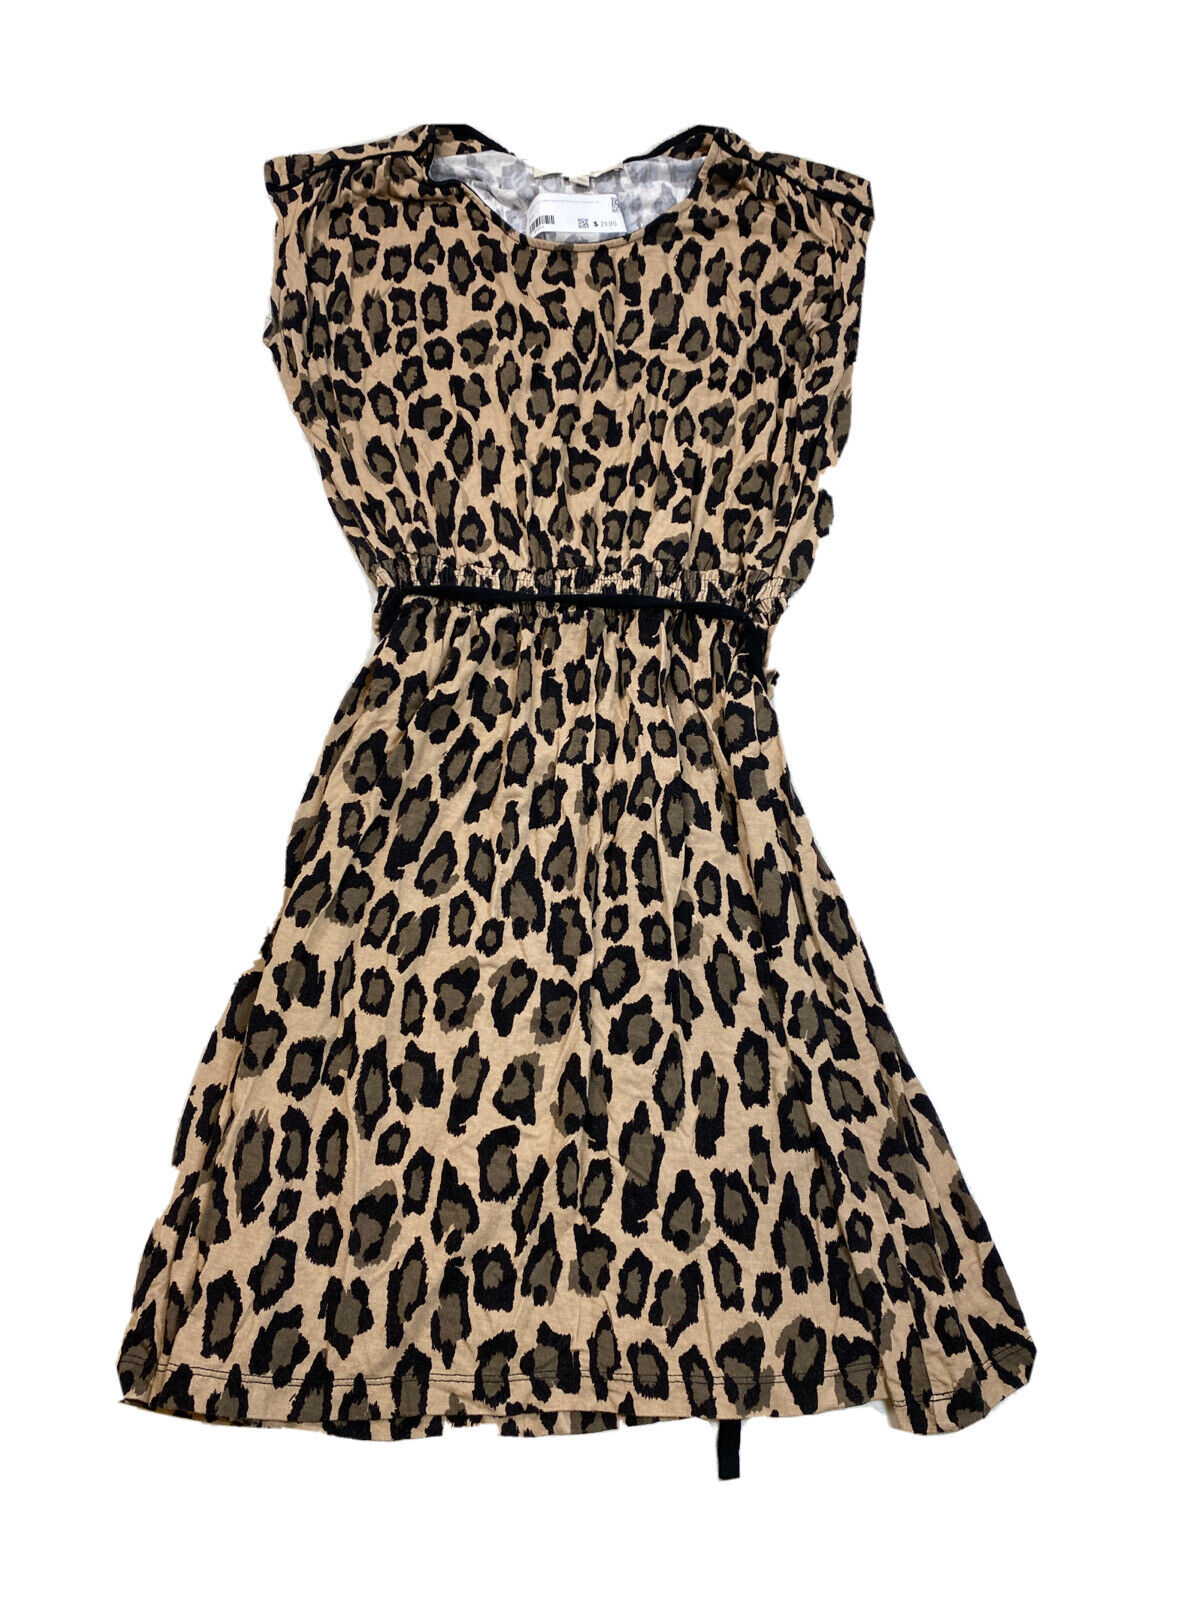 LOFT Women's Brown/Black Animal Print Sleeveless A-Line Dress - XS